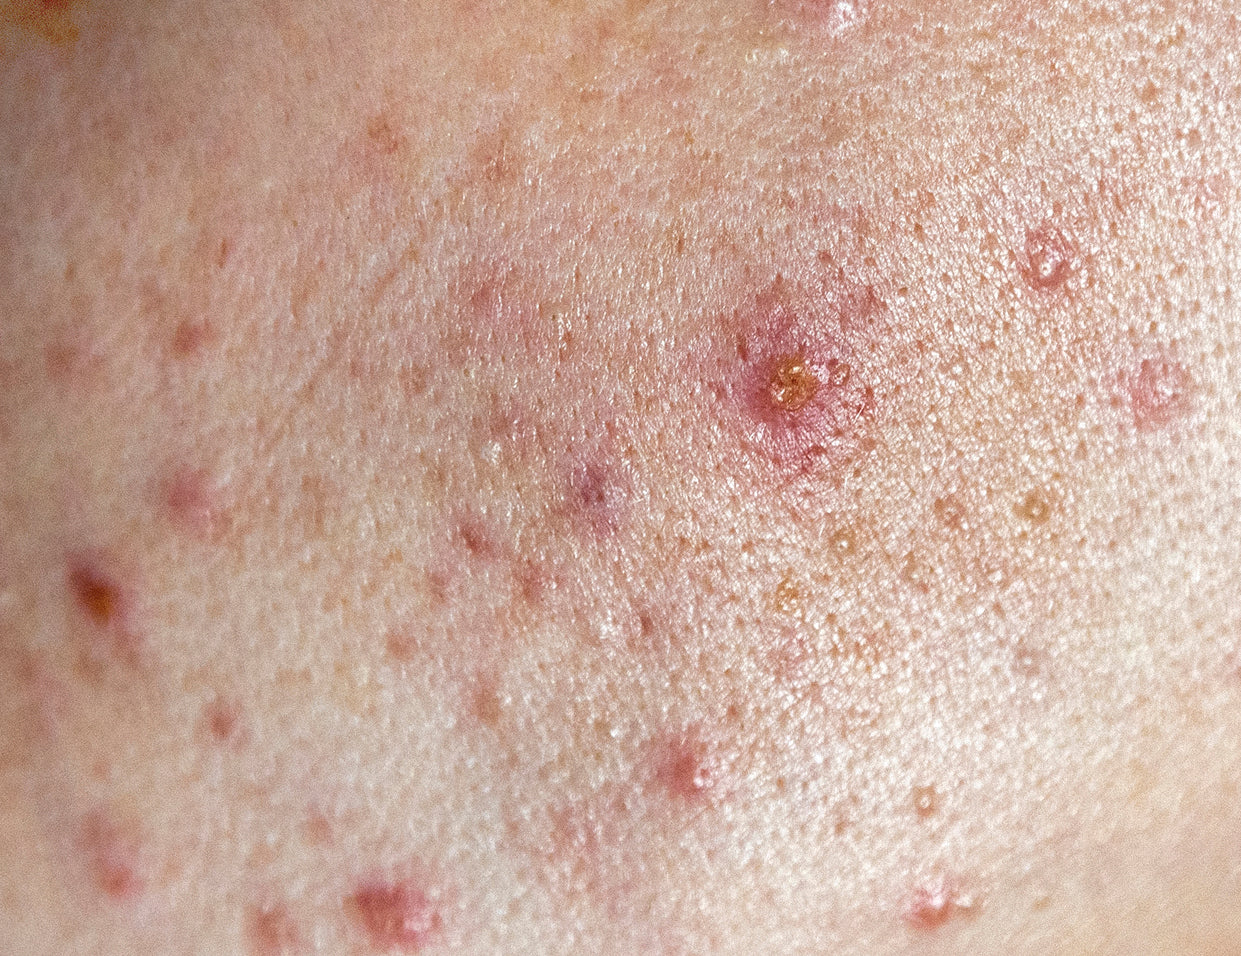 acne-prone skin type